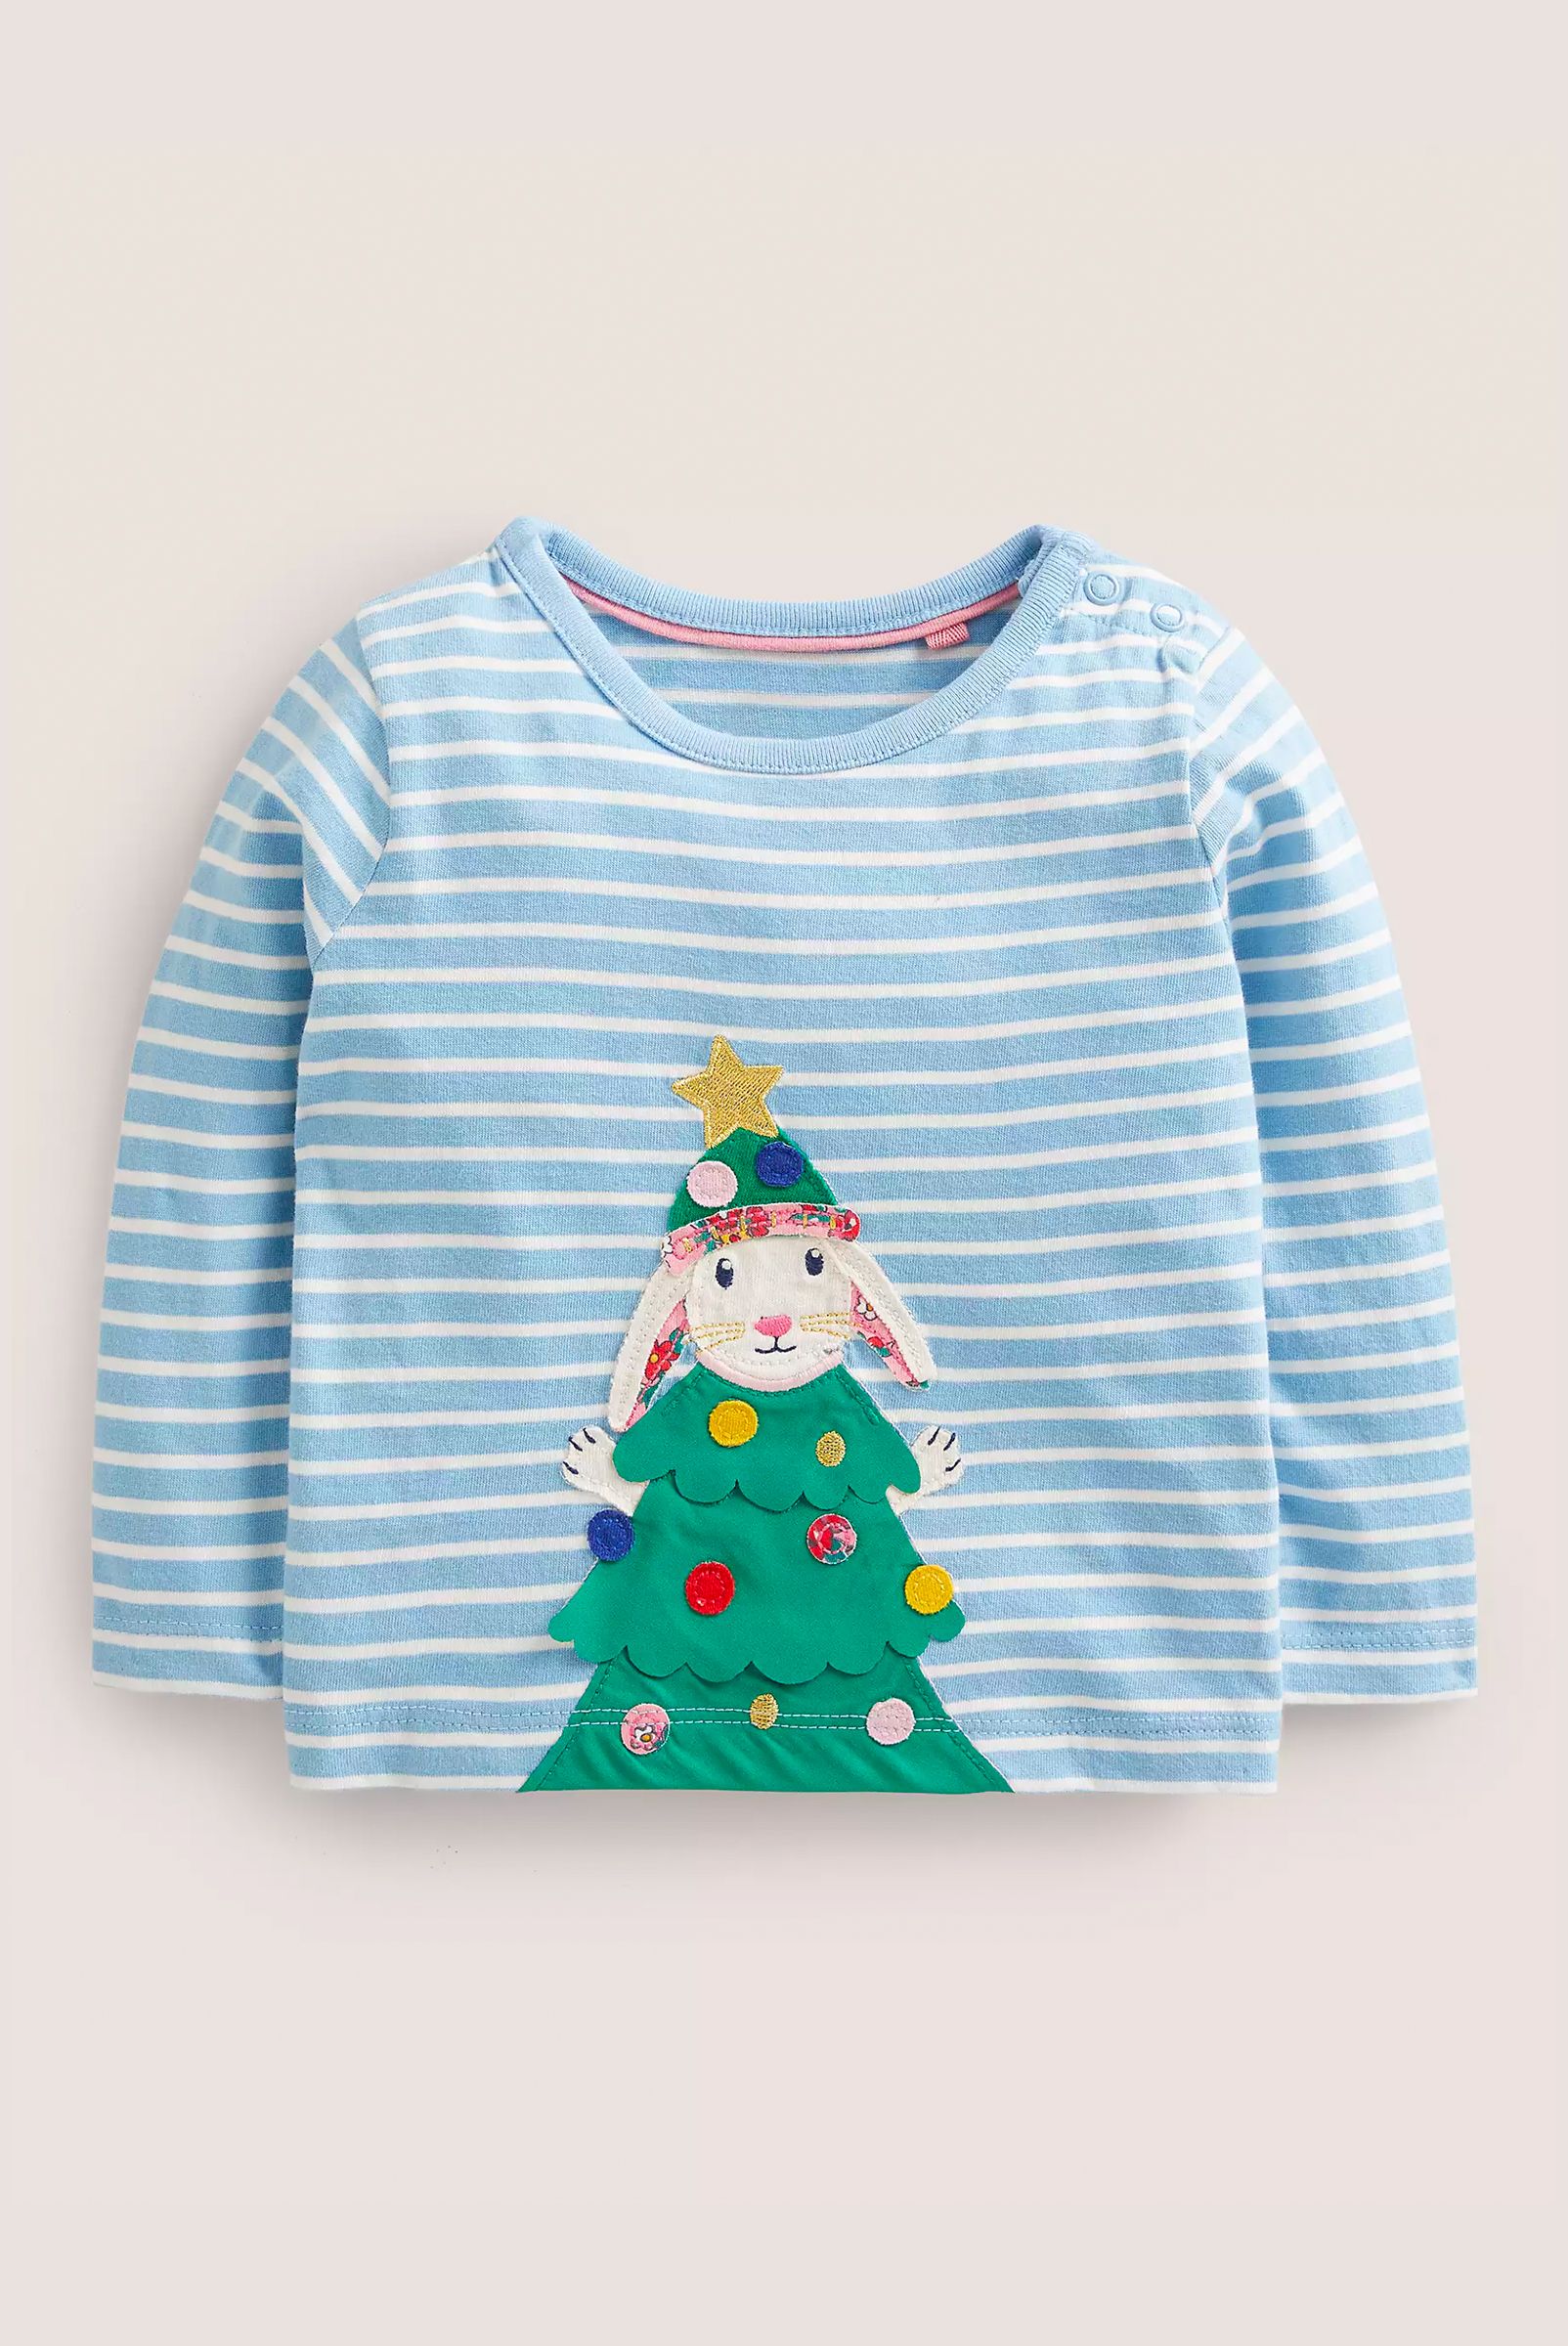 Mini Boden Baby Bunny Christmas Tree Appliqué T-Shirt, £11.90